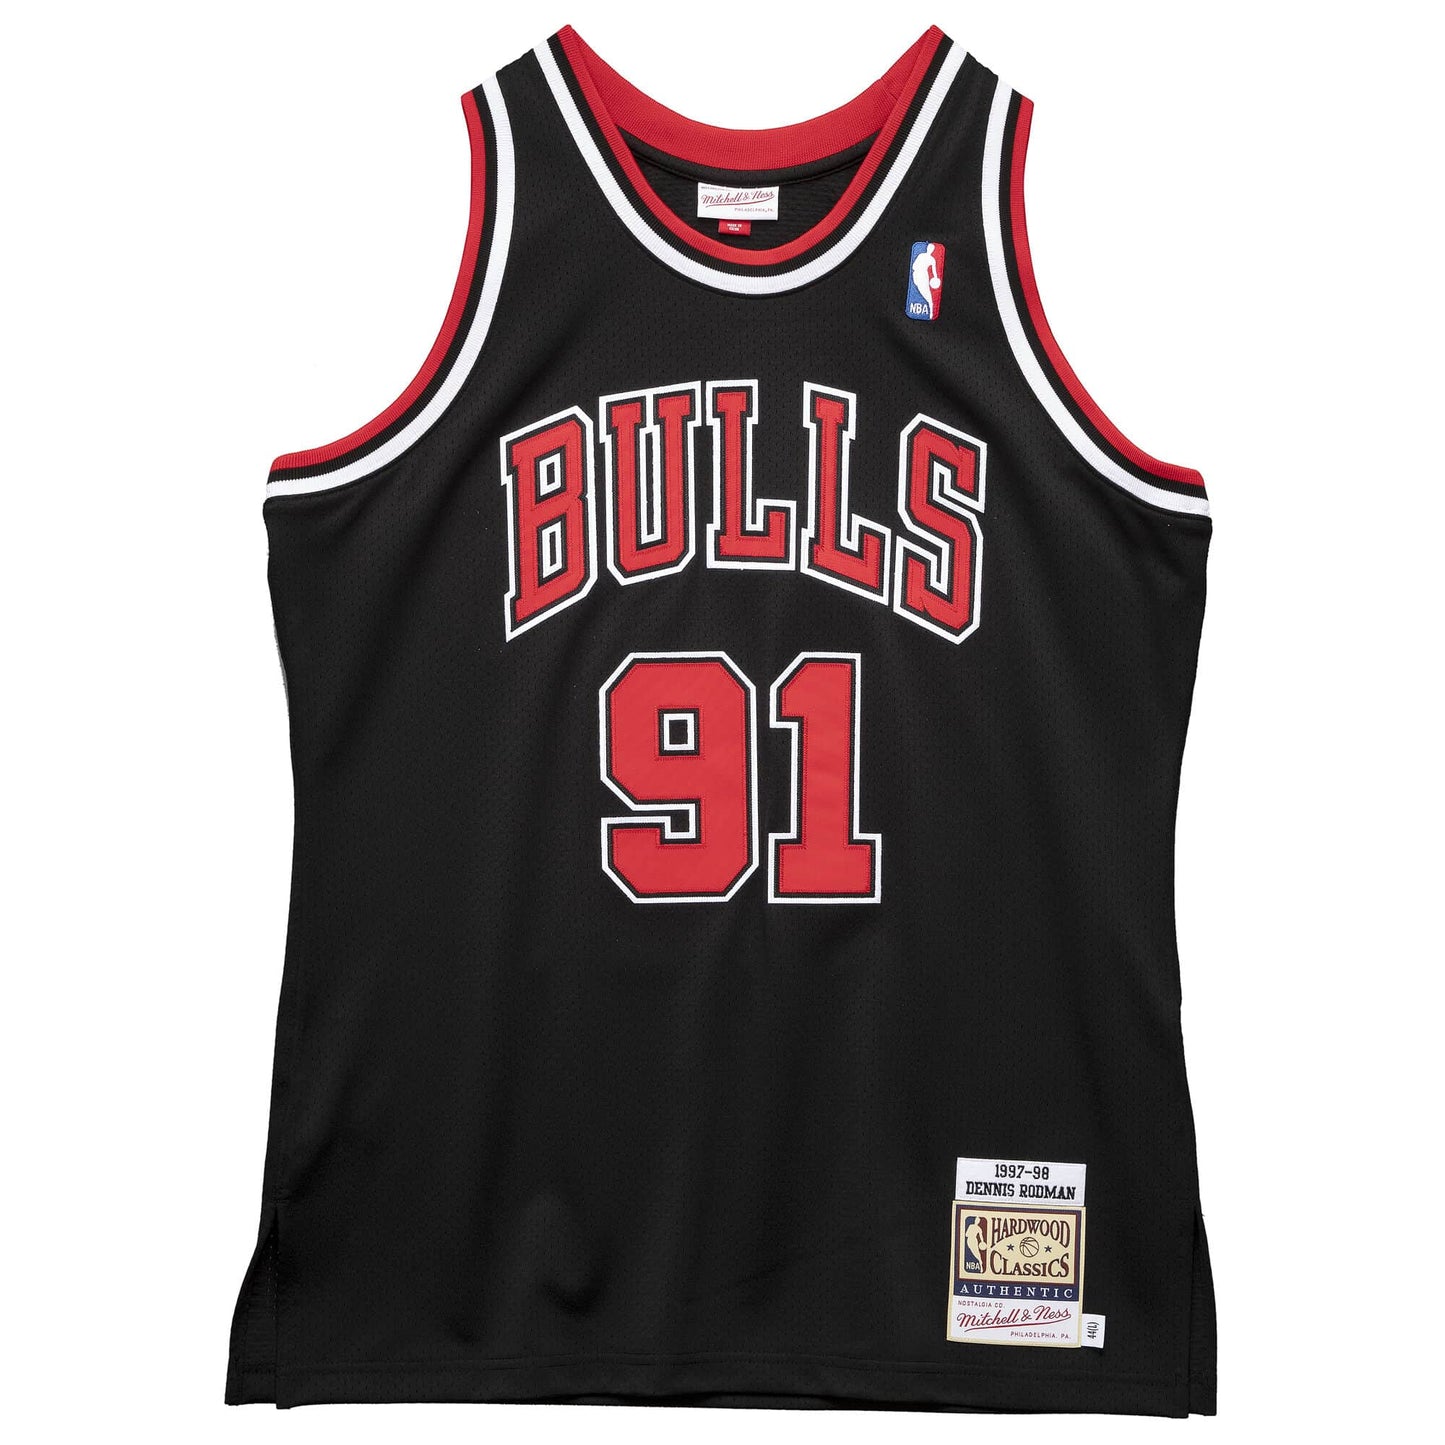 Authentic Dennis Rodman Chicago Bulls Alternate 1997-98 Jersey